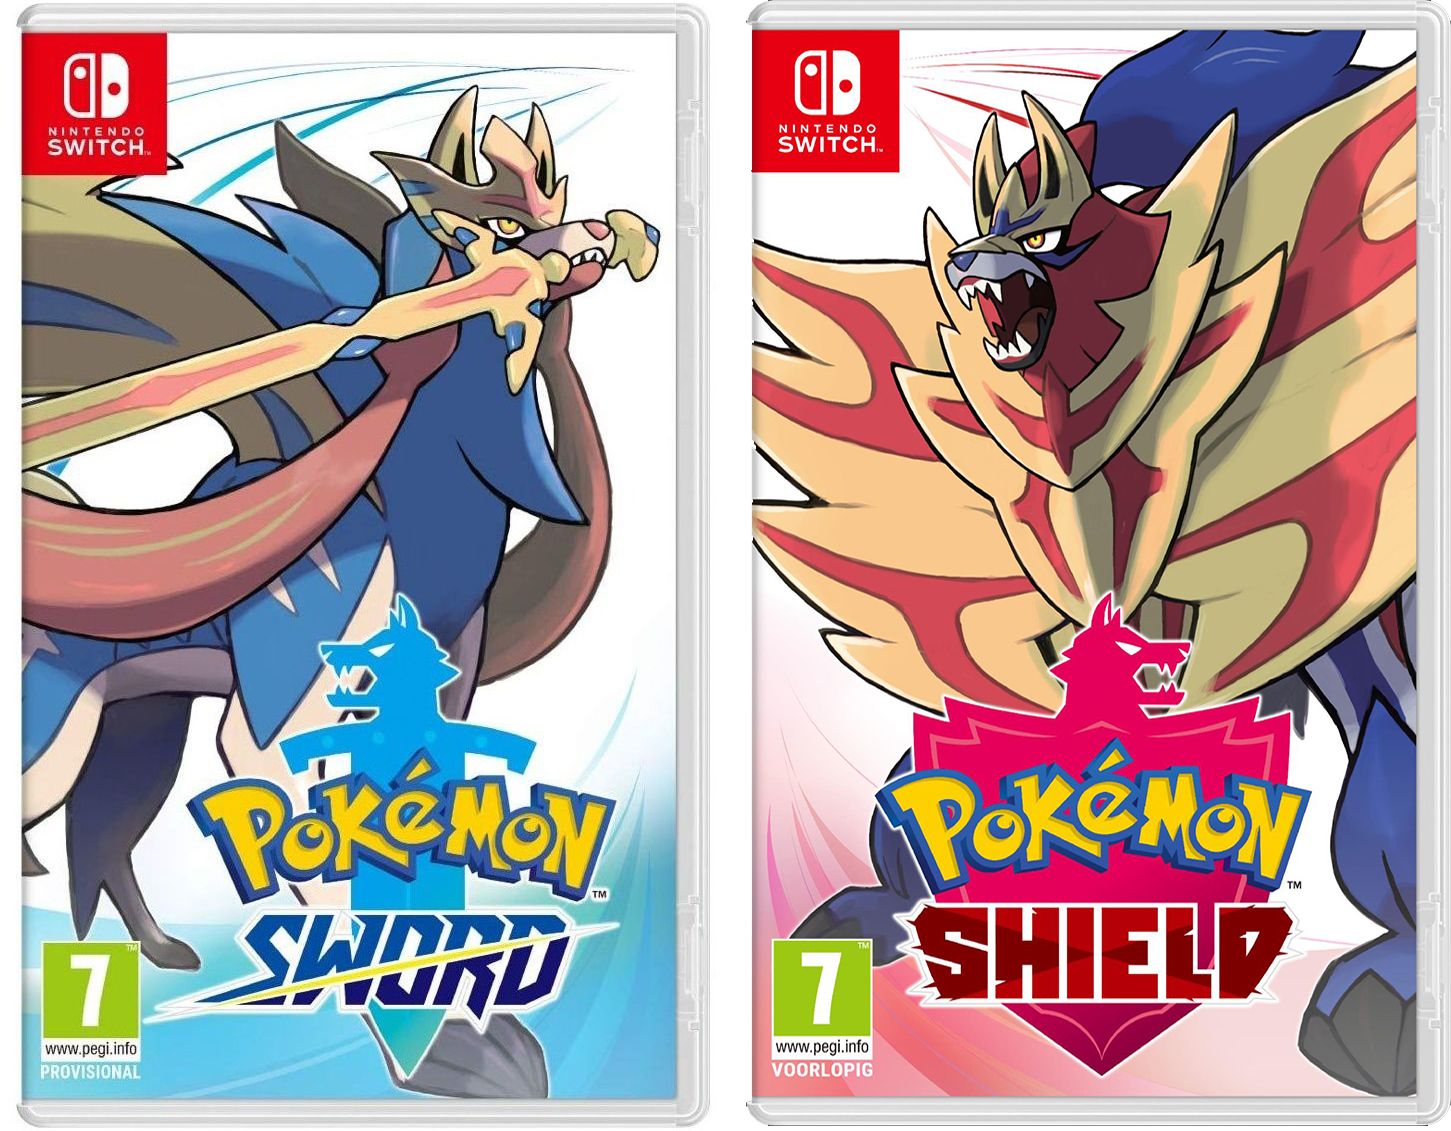 Pokémon Sword and Shield Covers